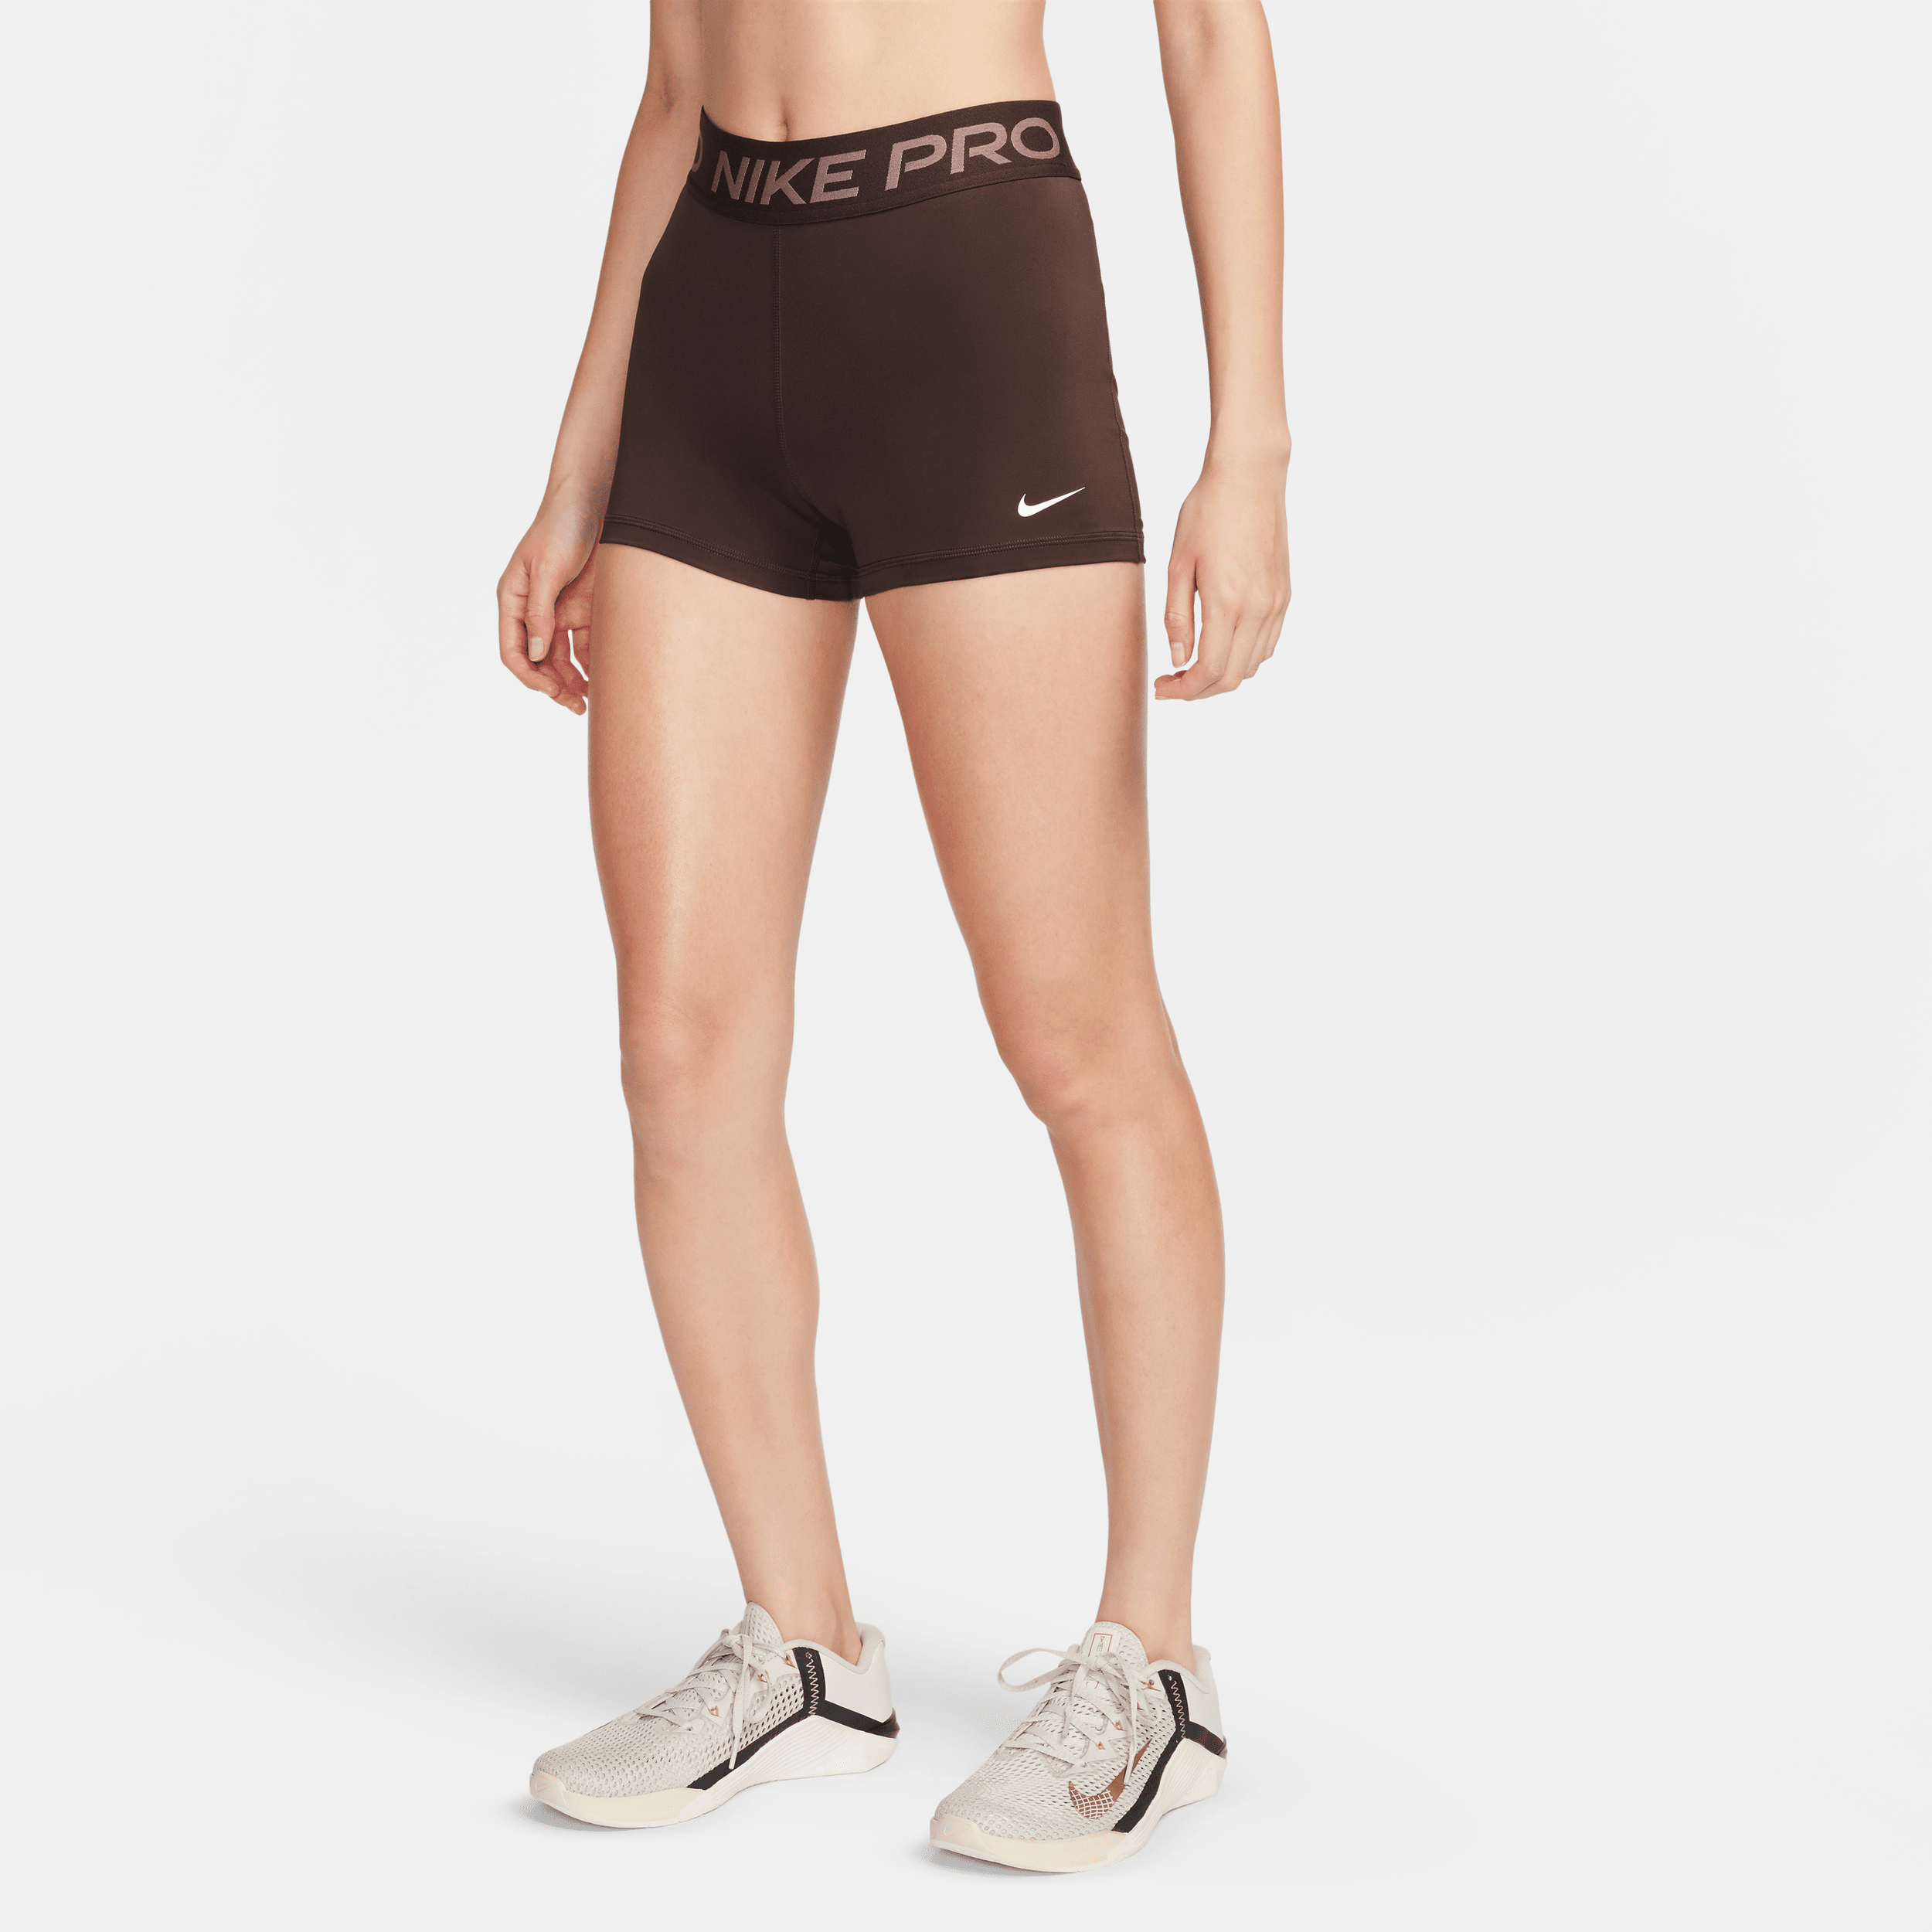 Shorts 8 cm Nike Pro - Donna - Marrone